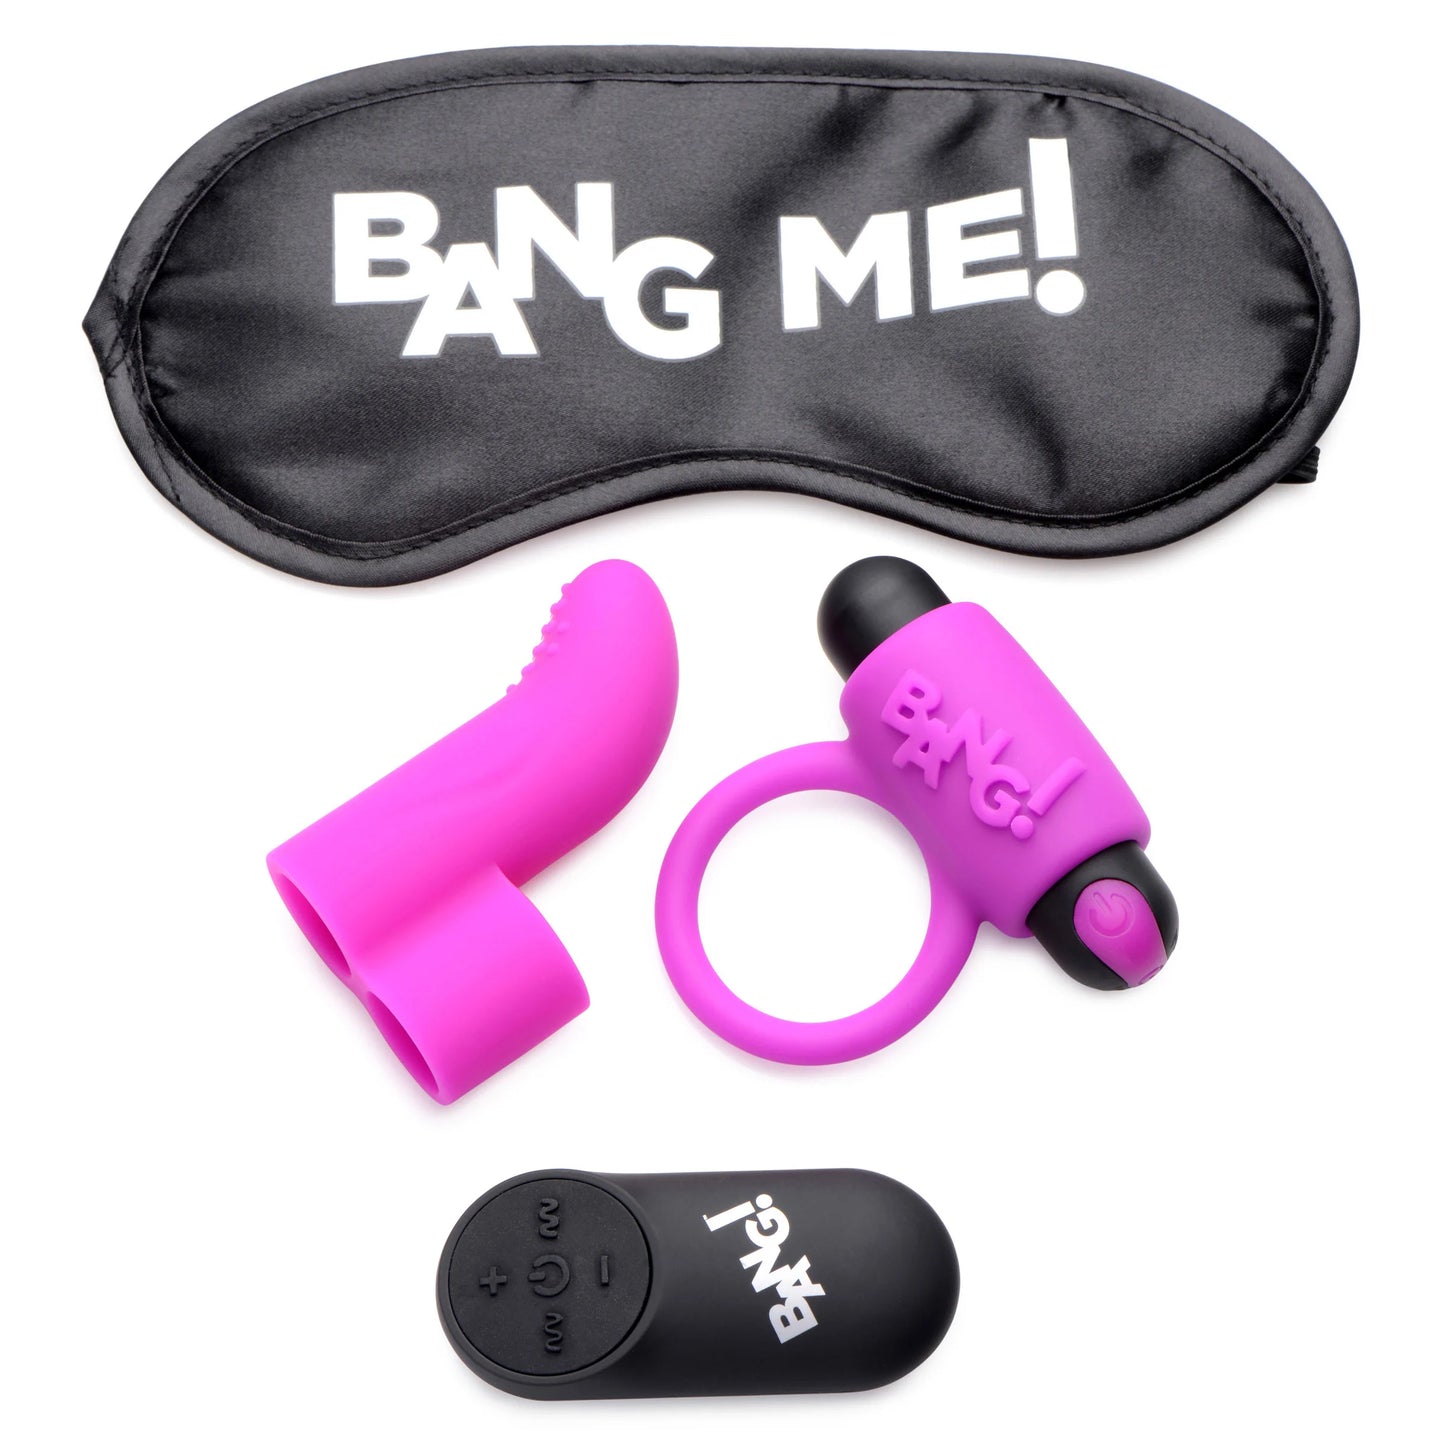 Bang! Couples Vibration Kit